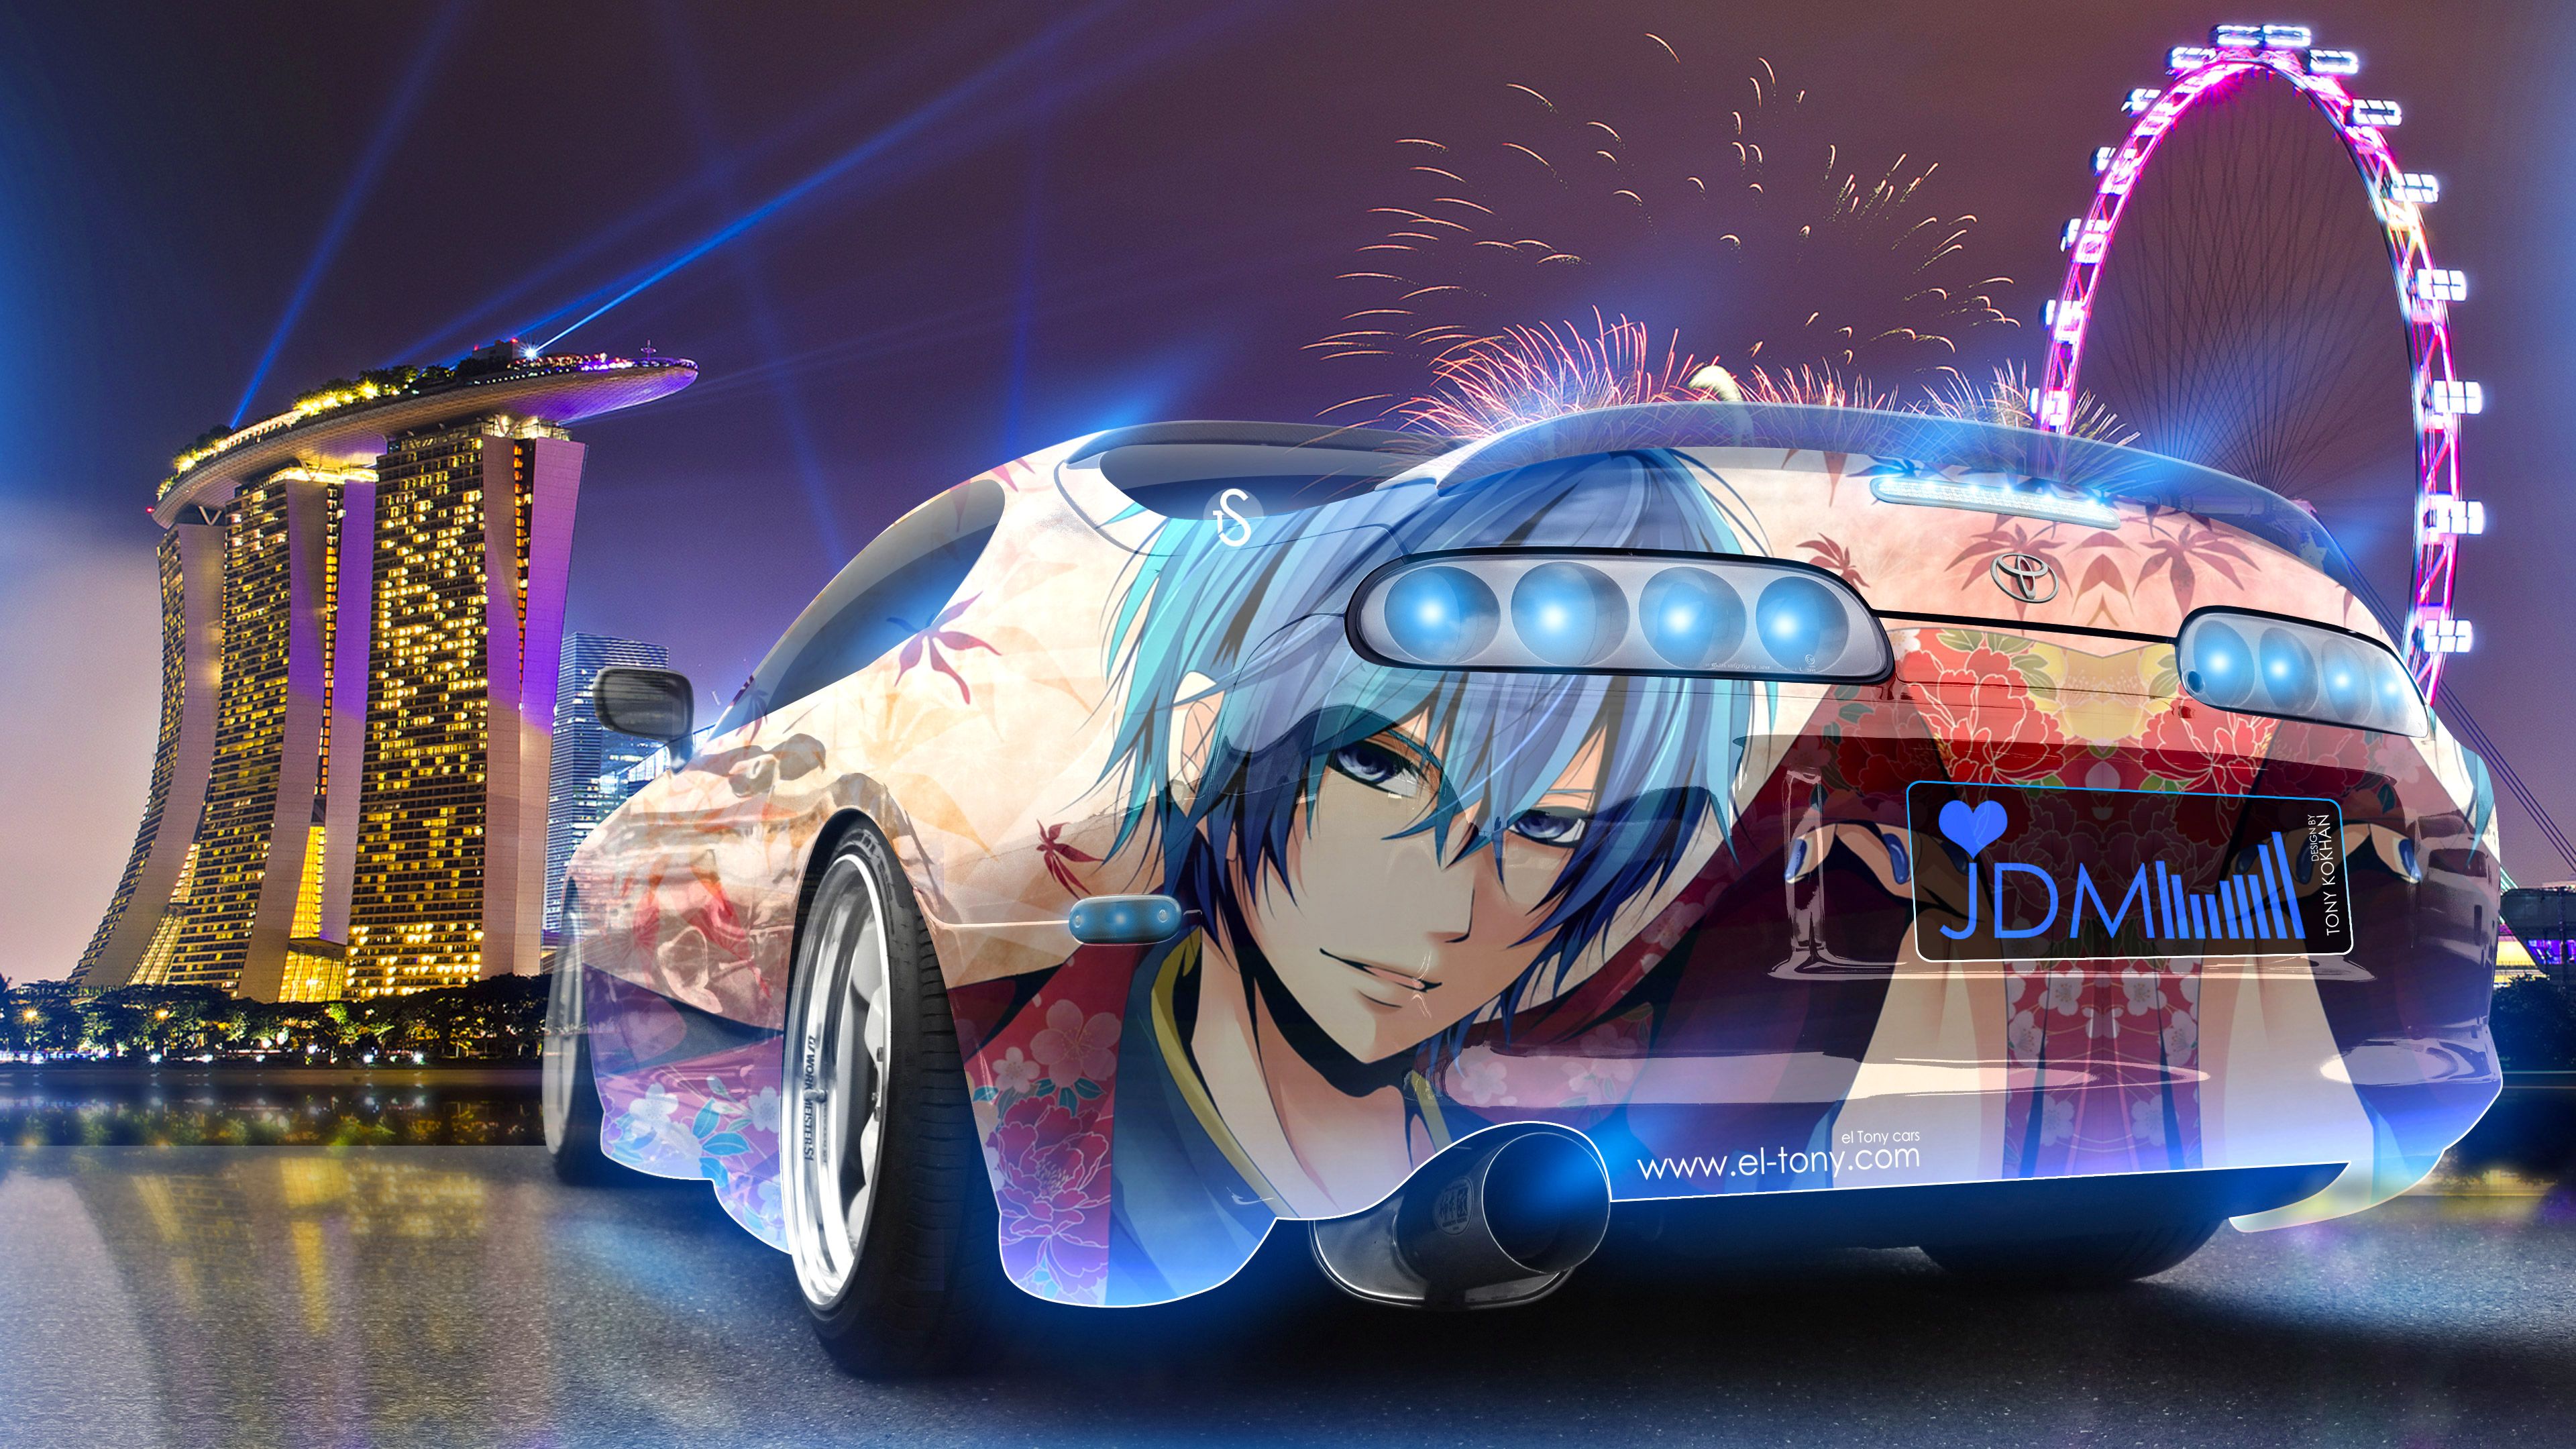 Toyota Supra JDM Tuning Anime Boy Aerography City Car 2015 el Tony